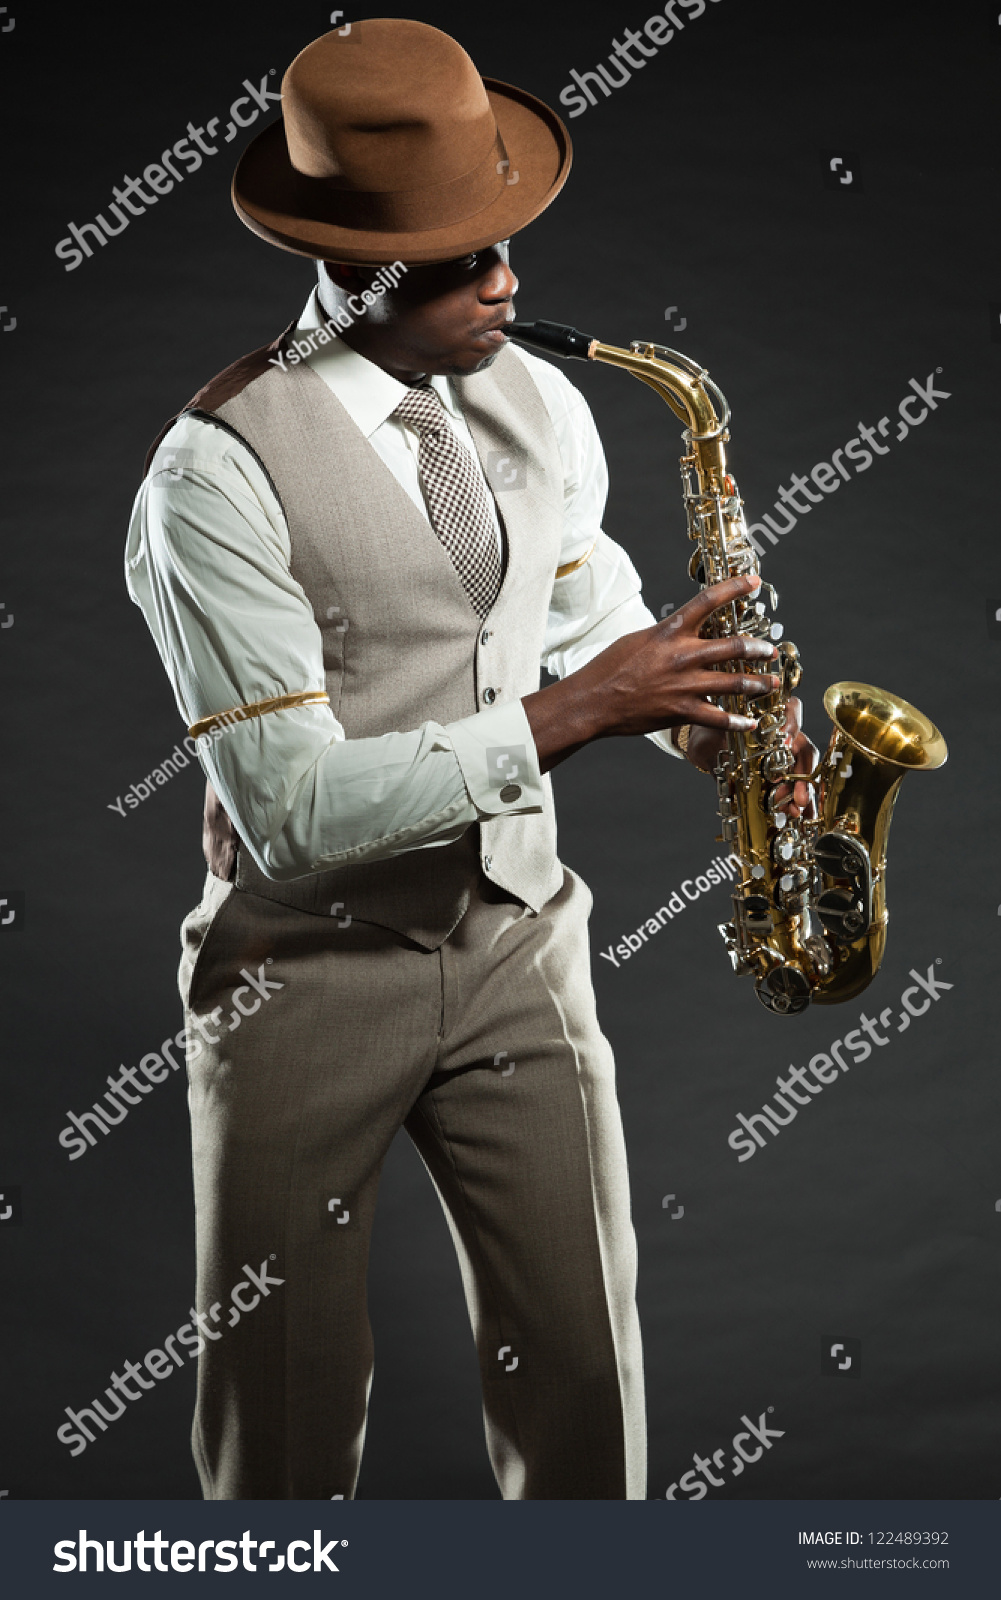 Black american jazz saxophone player. Vintage. Studio shot. #122489392